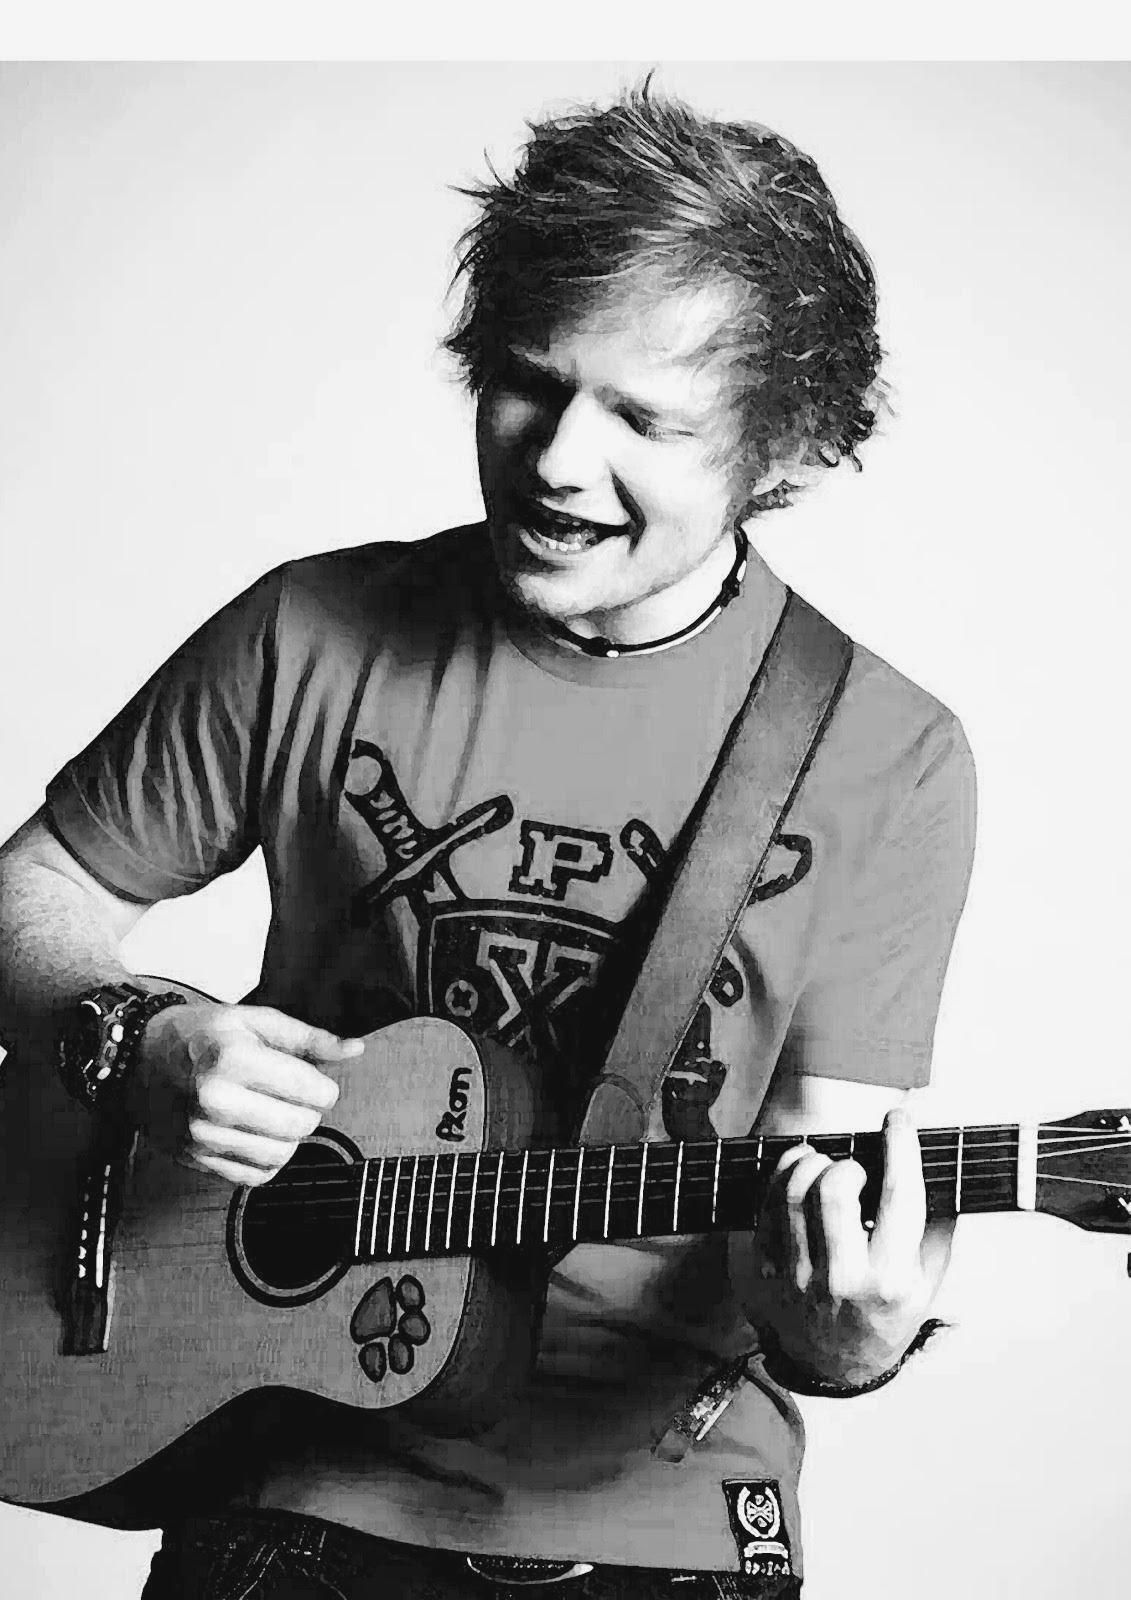 ed sheeran phone background. Ed sheeran lyrics, Ed